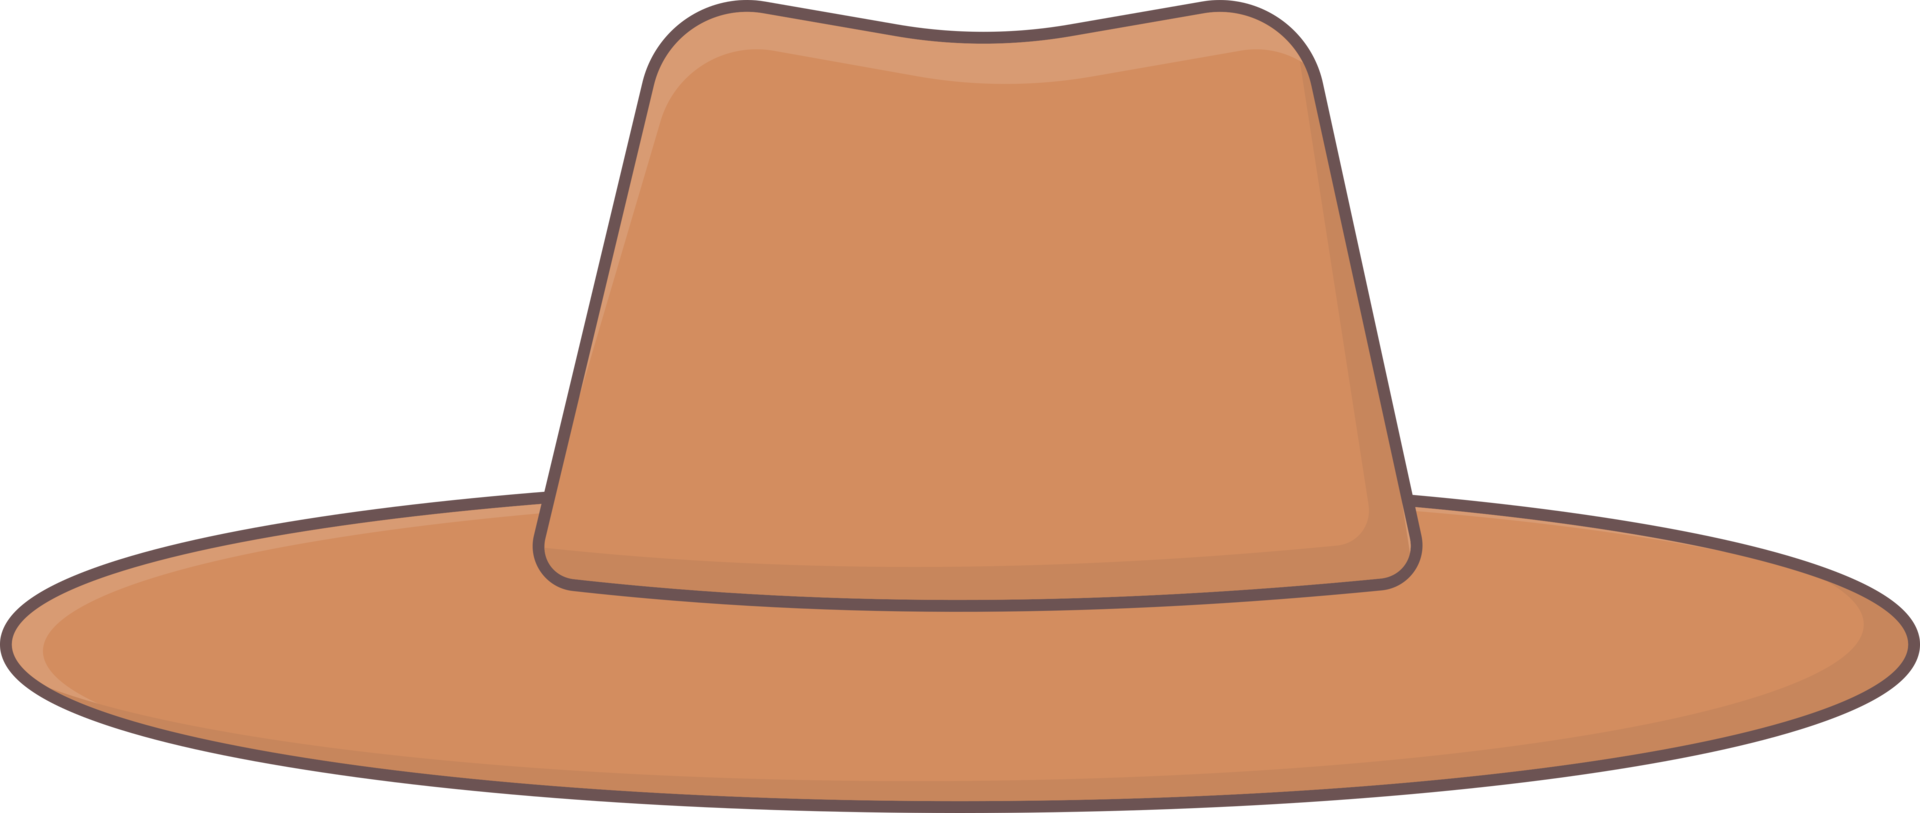 cowboy hat icon png